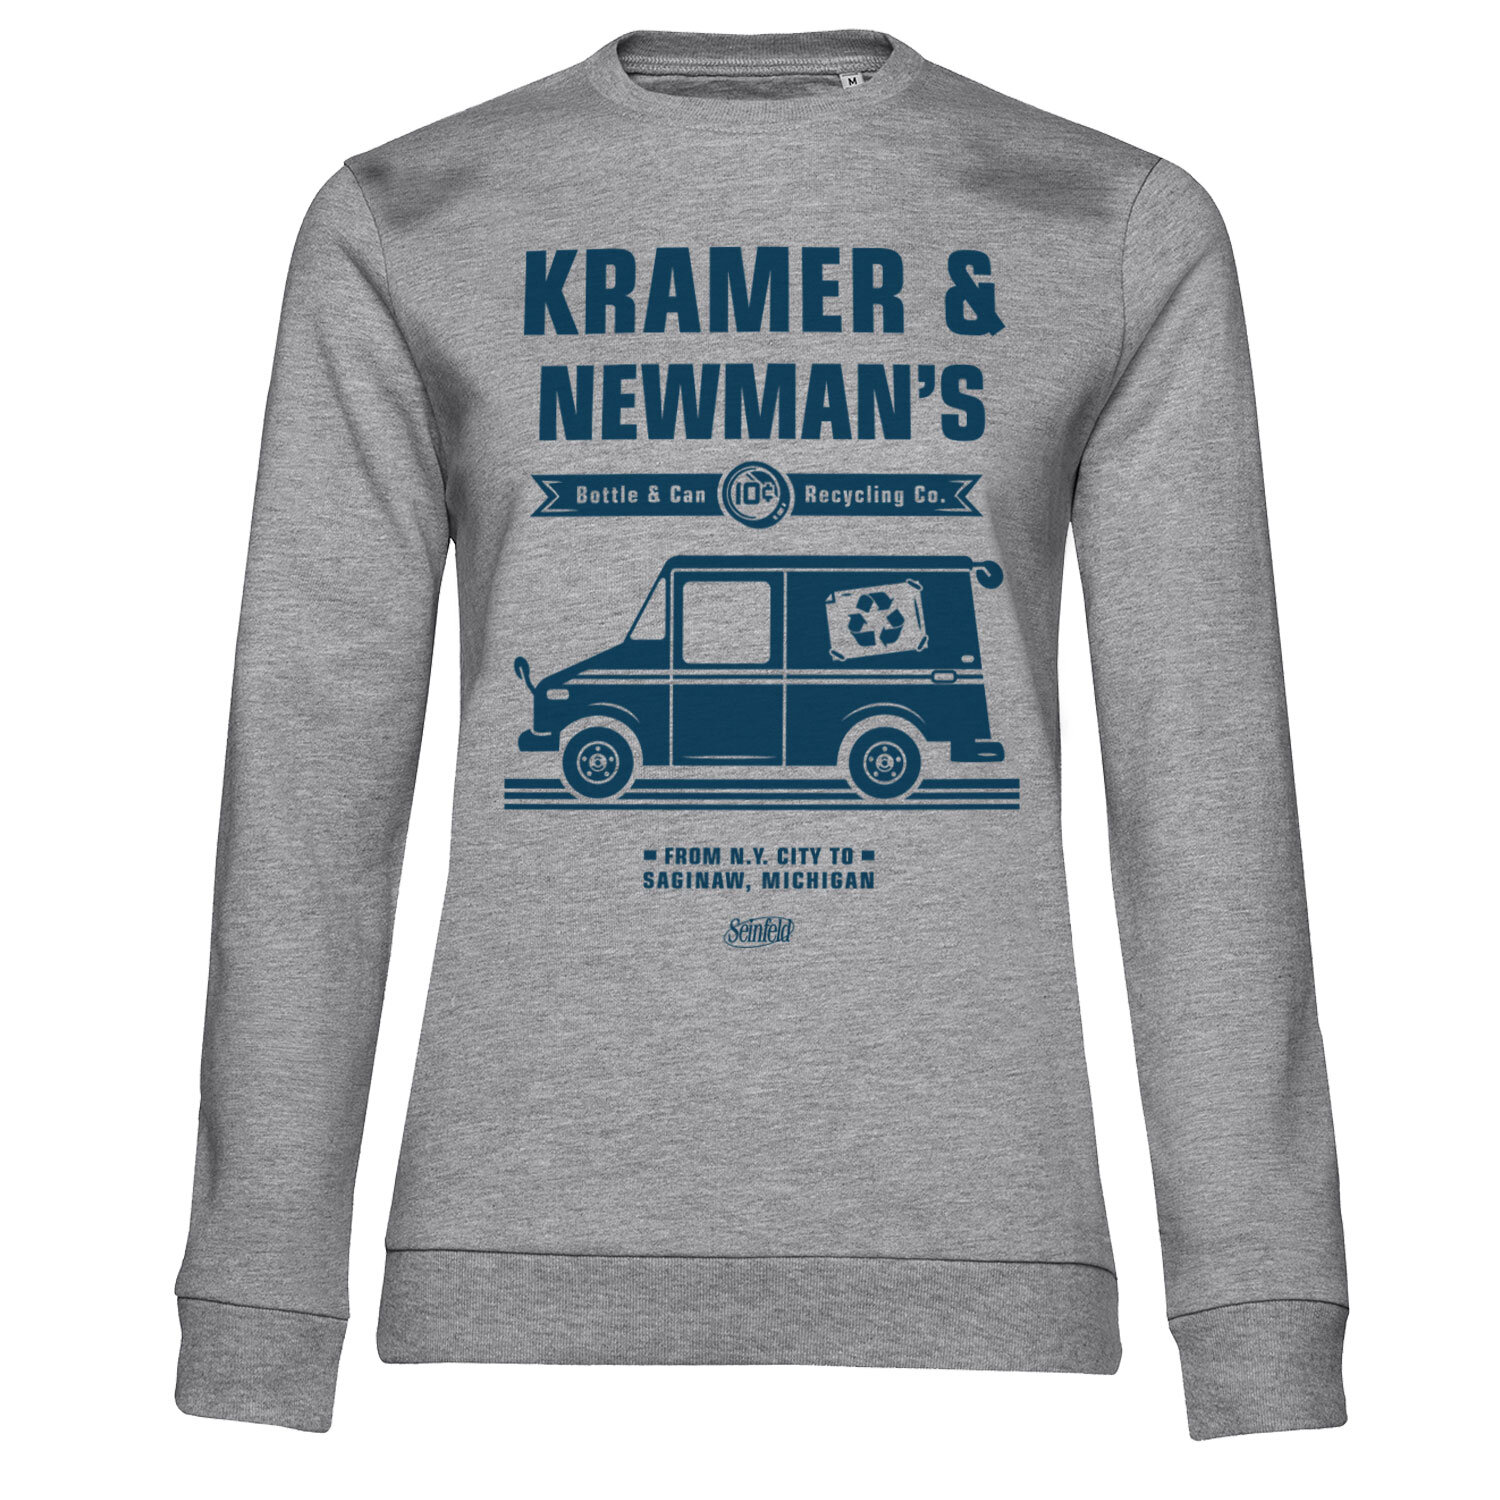 Kramer & Newman's Recycling Co Girly Sweatshirt